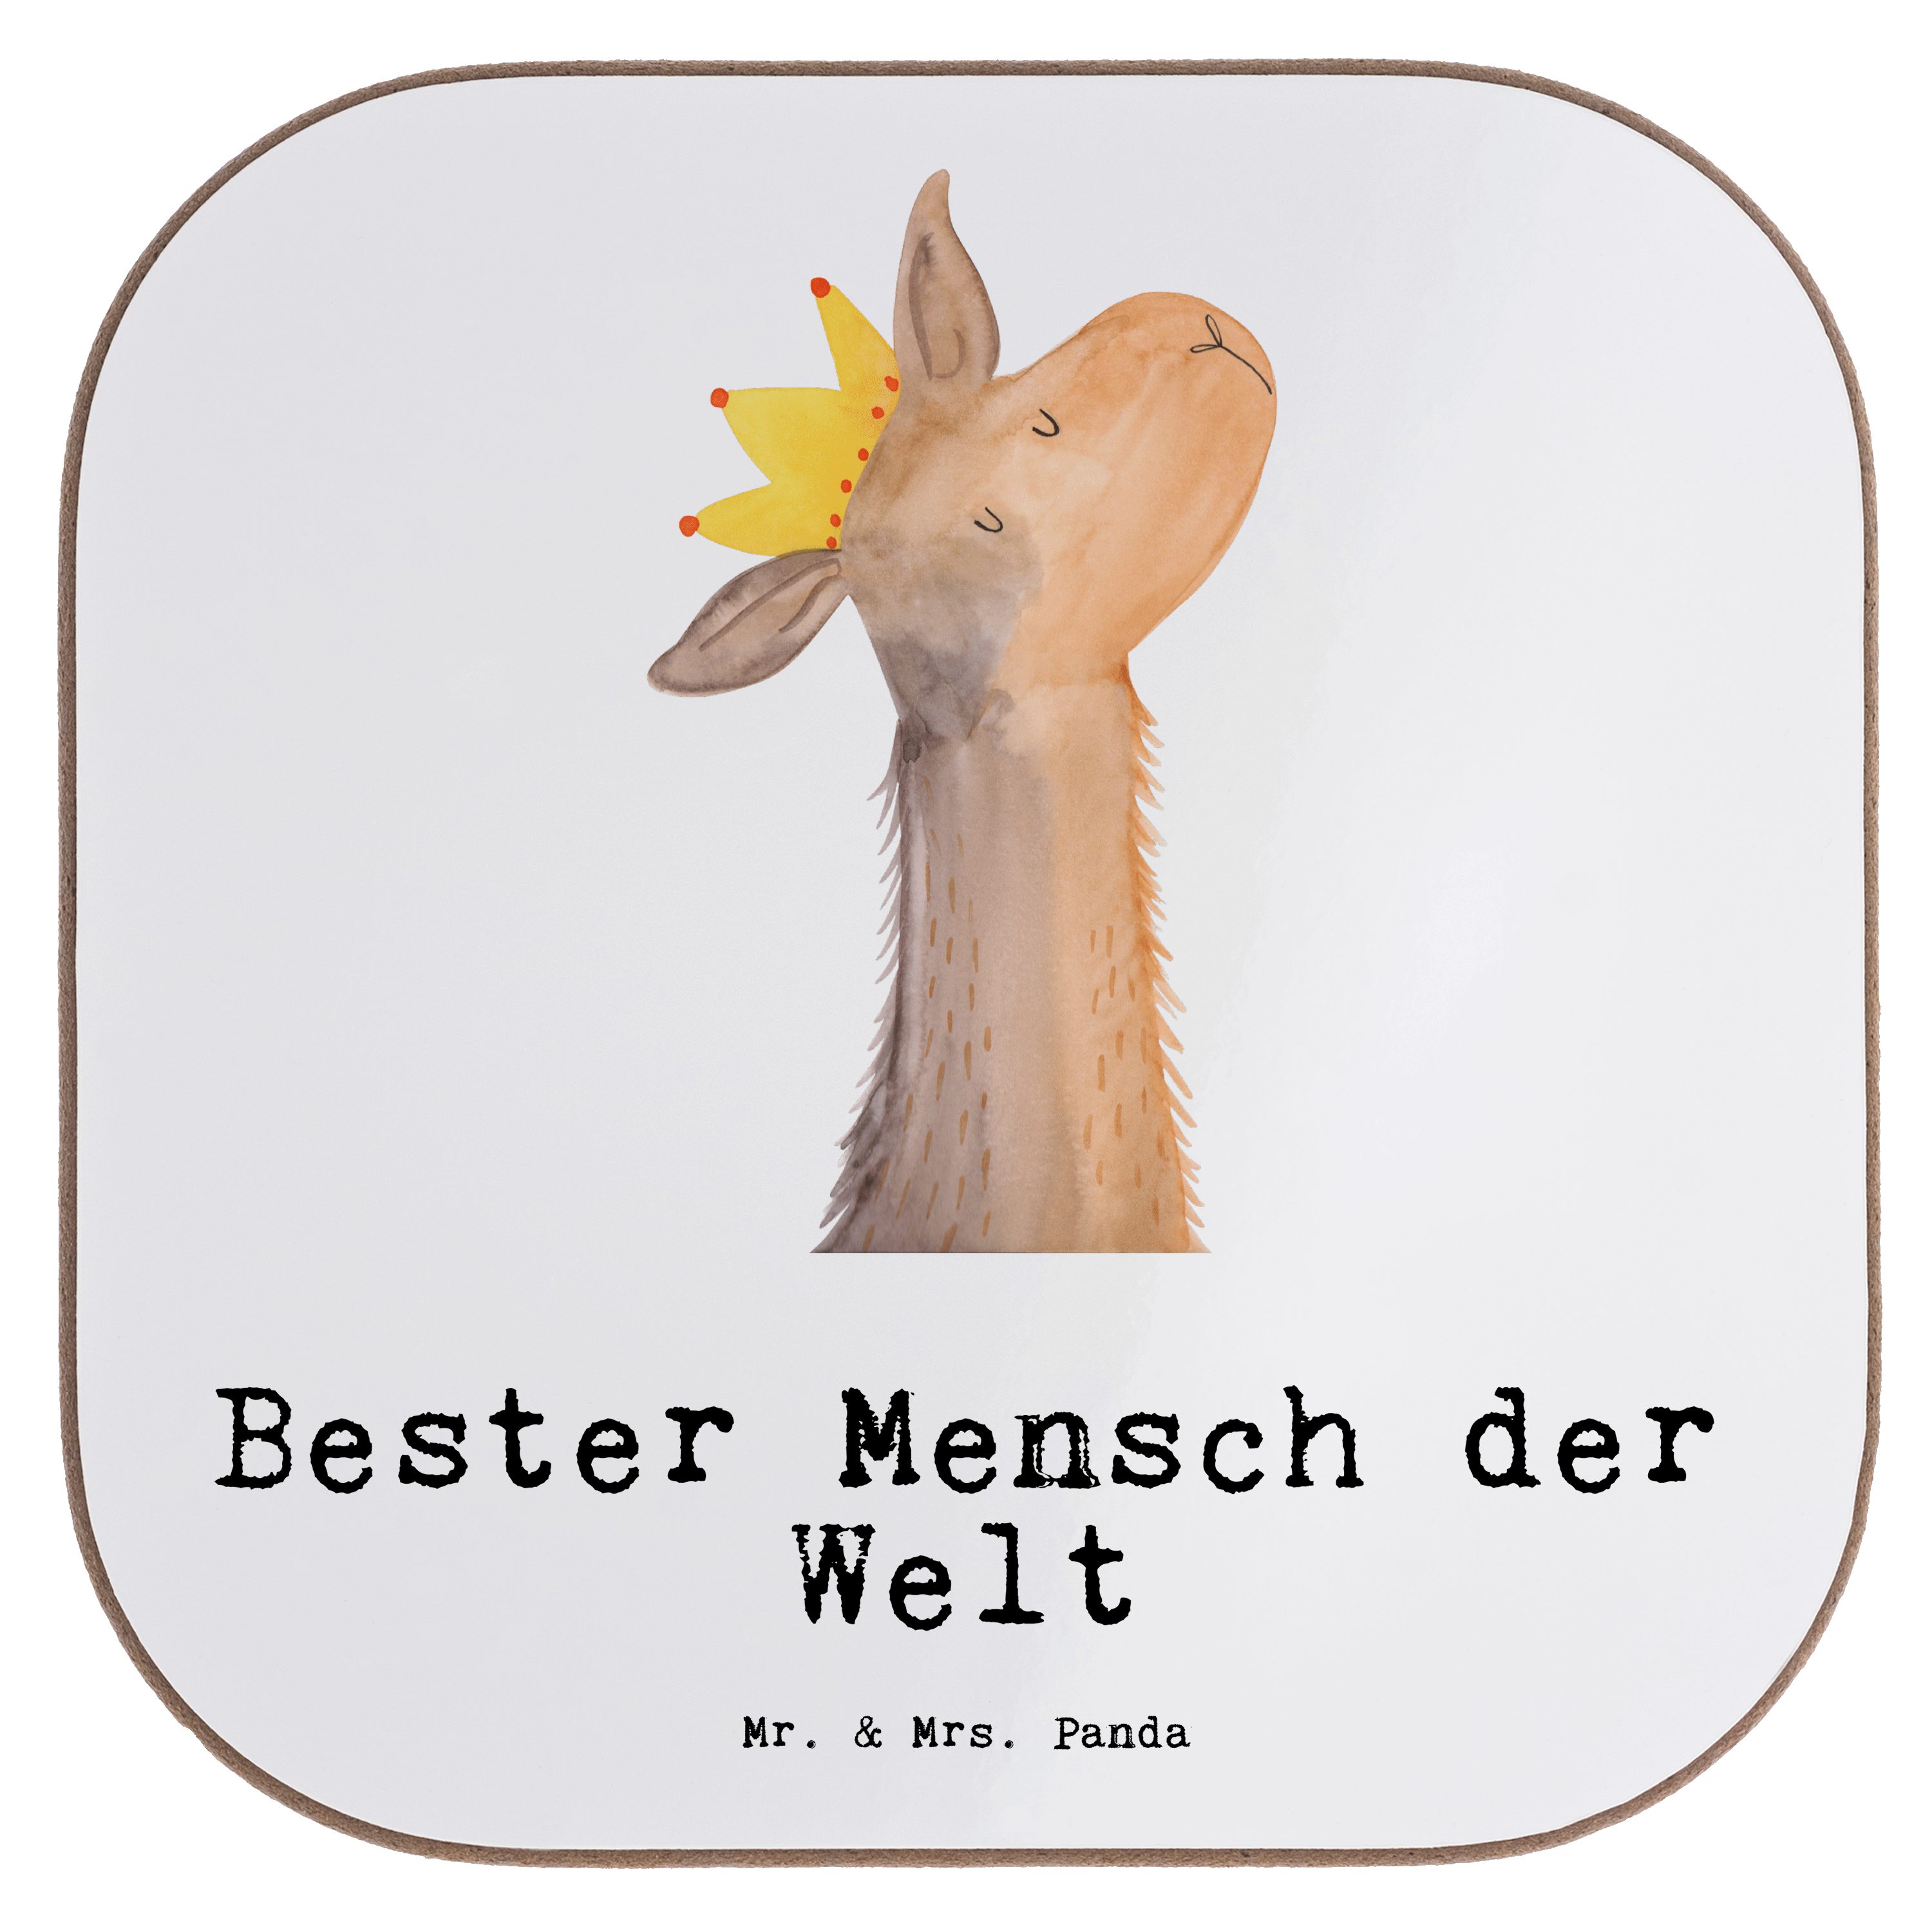 Mr. & Mrs. Panda Getränkeuntersetzer Lama Bester Mensch der Welt - Weiß - Geschenk, Glasuntersetzer, Bierd, 1-tlg. | Getränkeuntersetzer